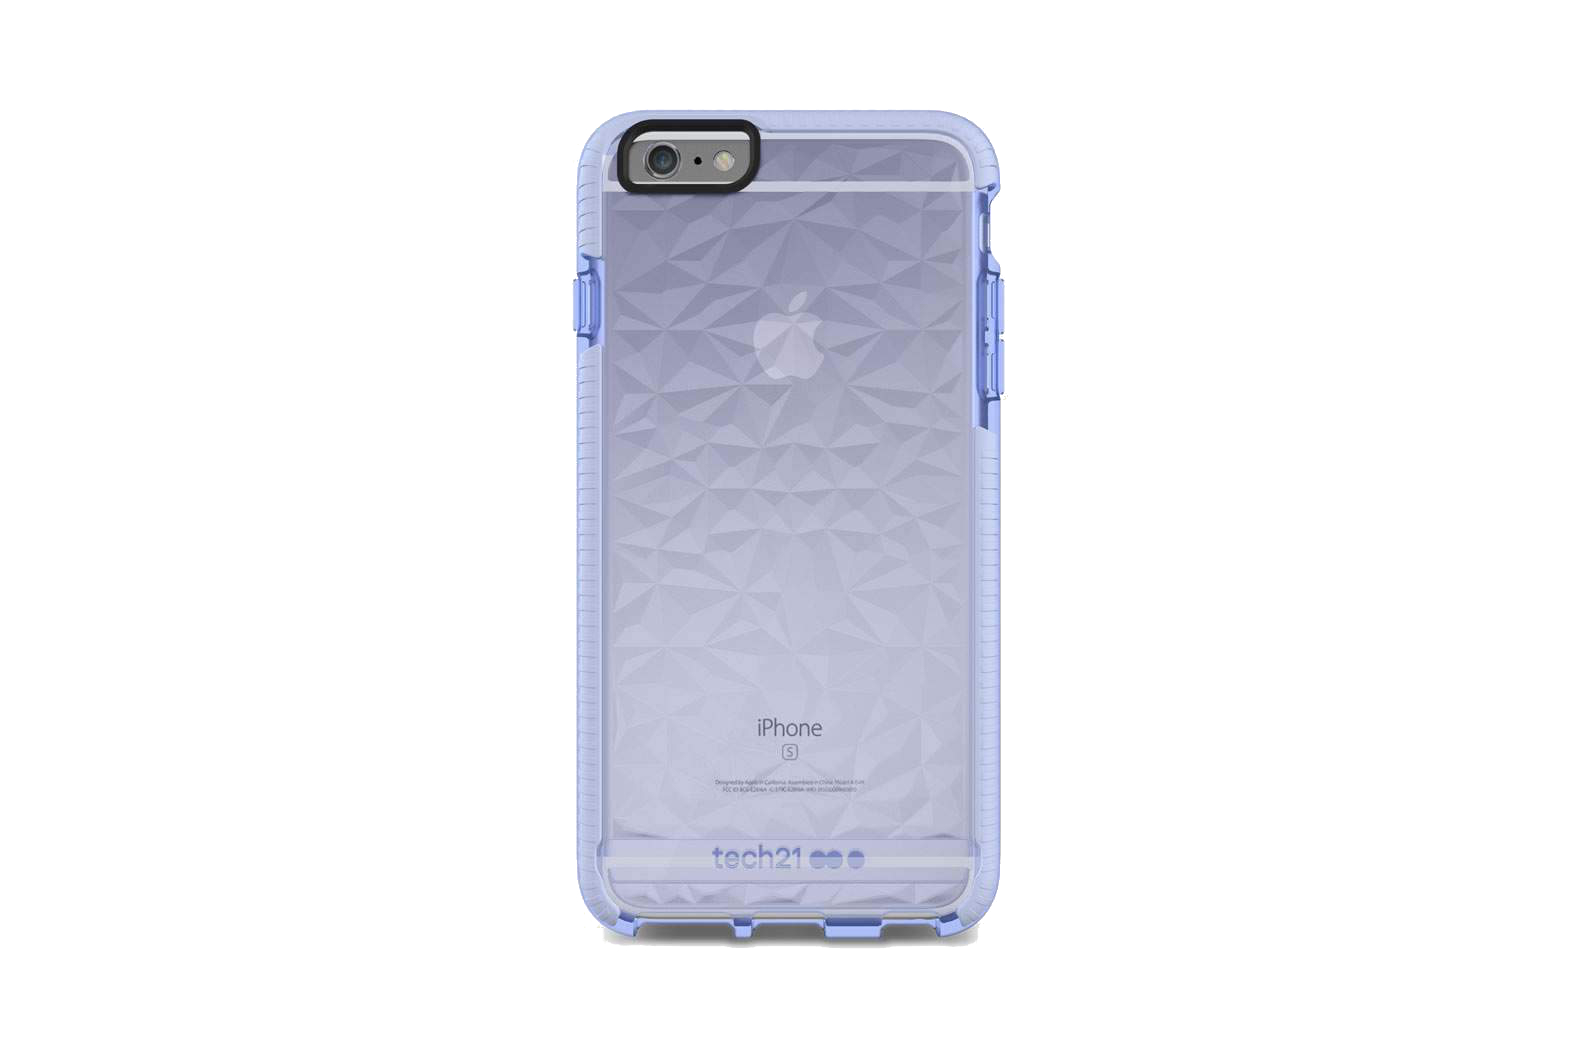 iPhone 6 Plus Case, Apple 6s Plus Case Ultra Thin Clear Case Cover